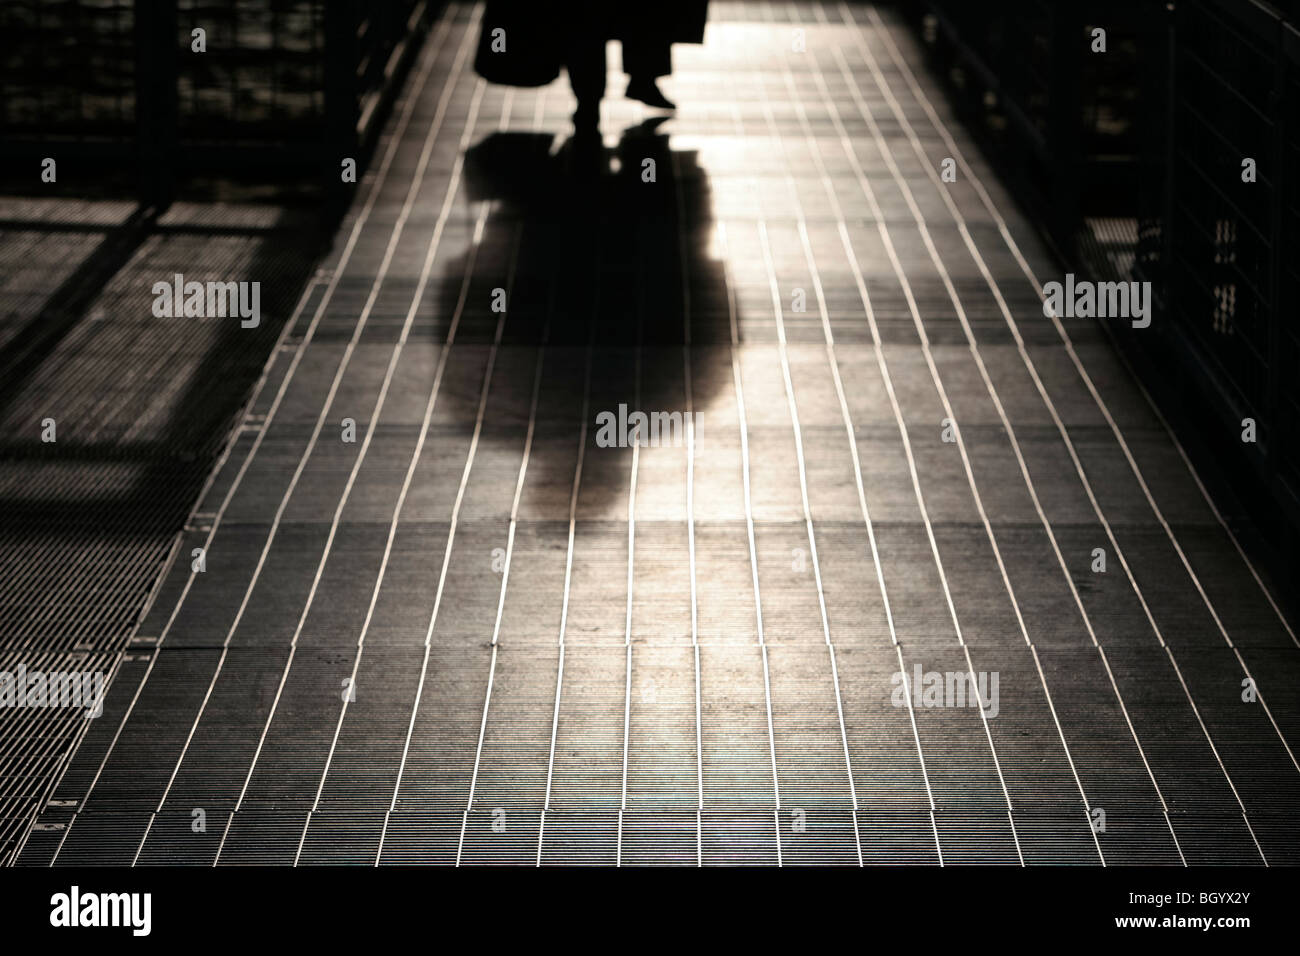 An industrial metal grid walkway background Stock Photo